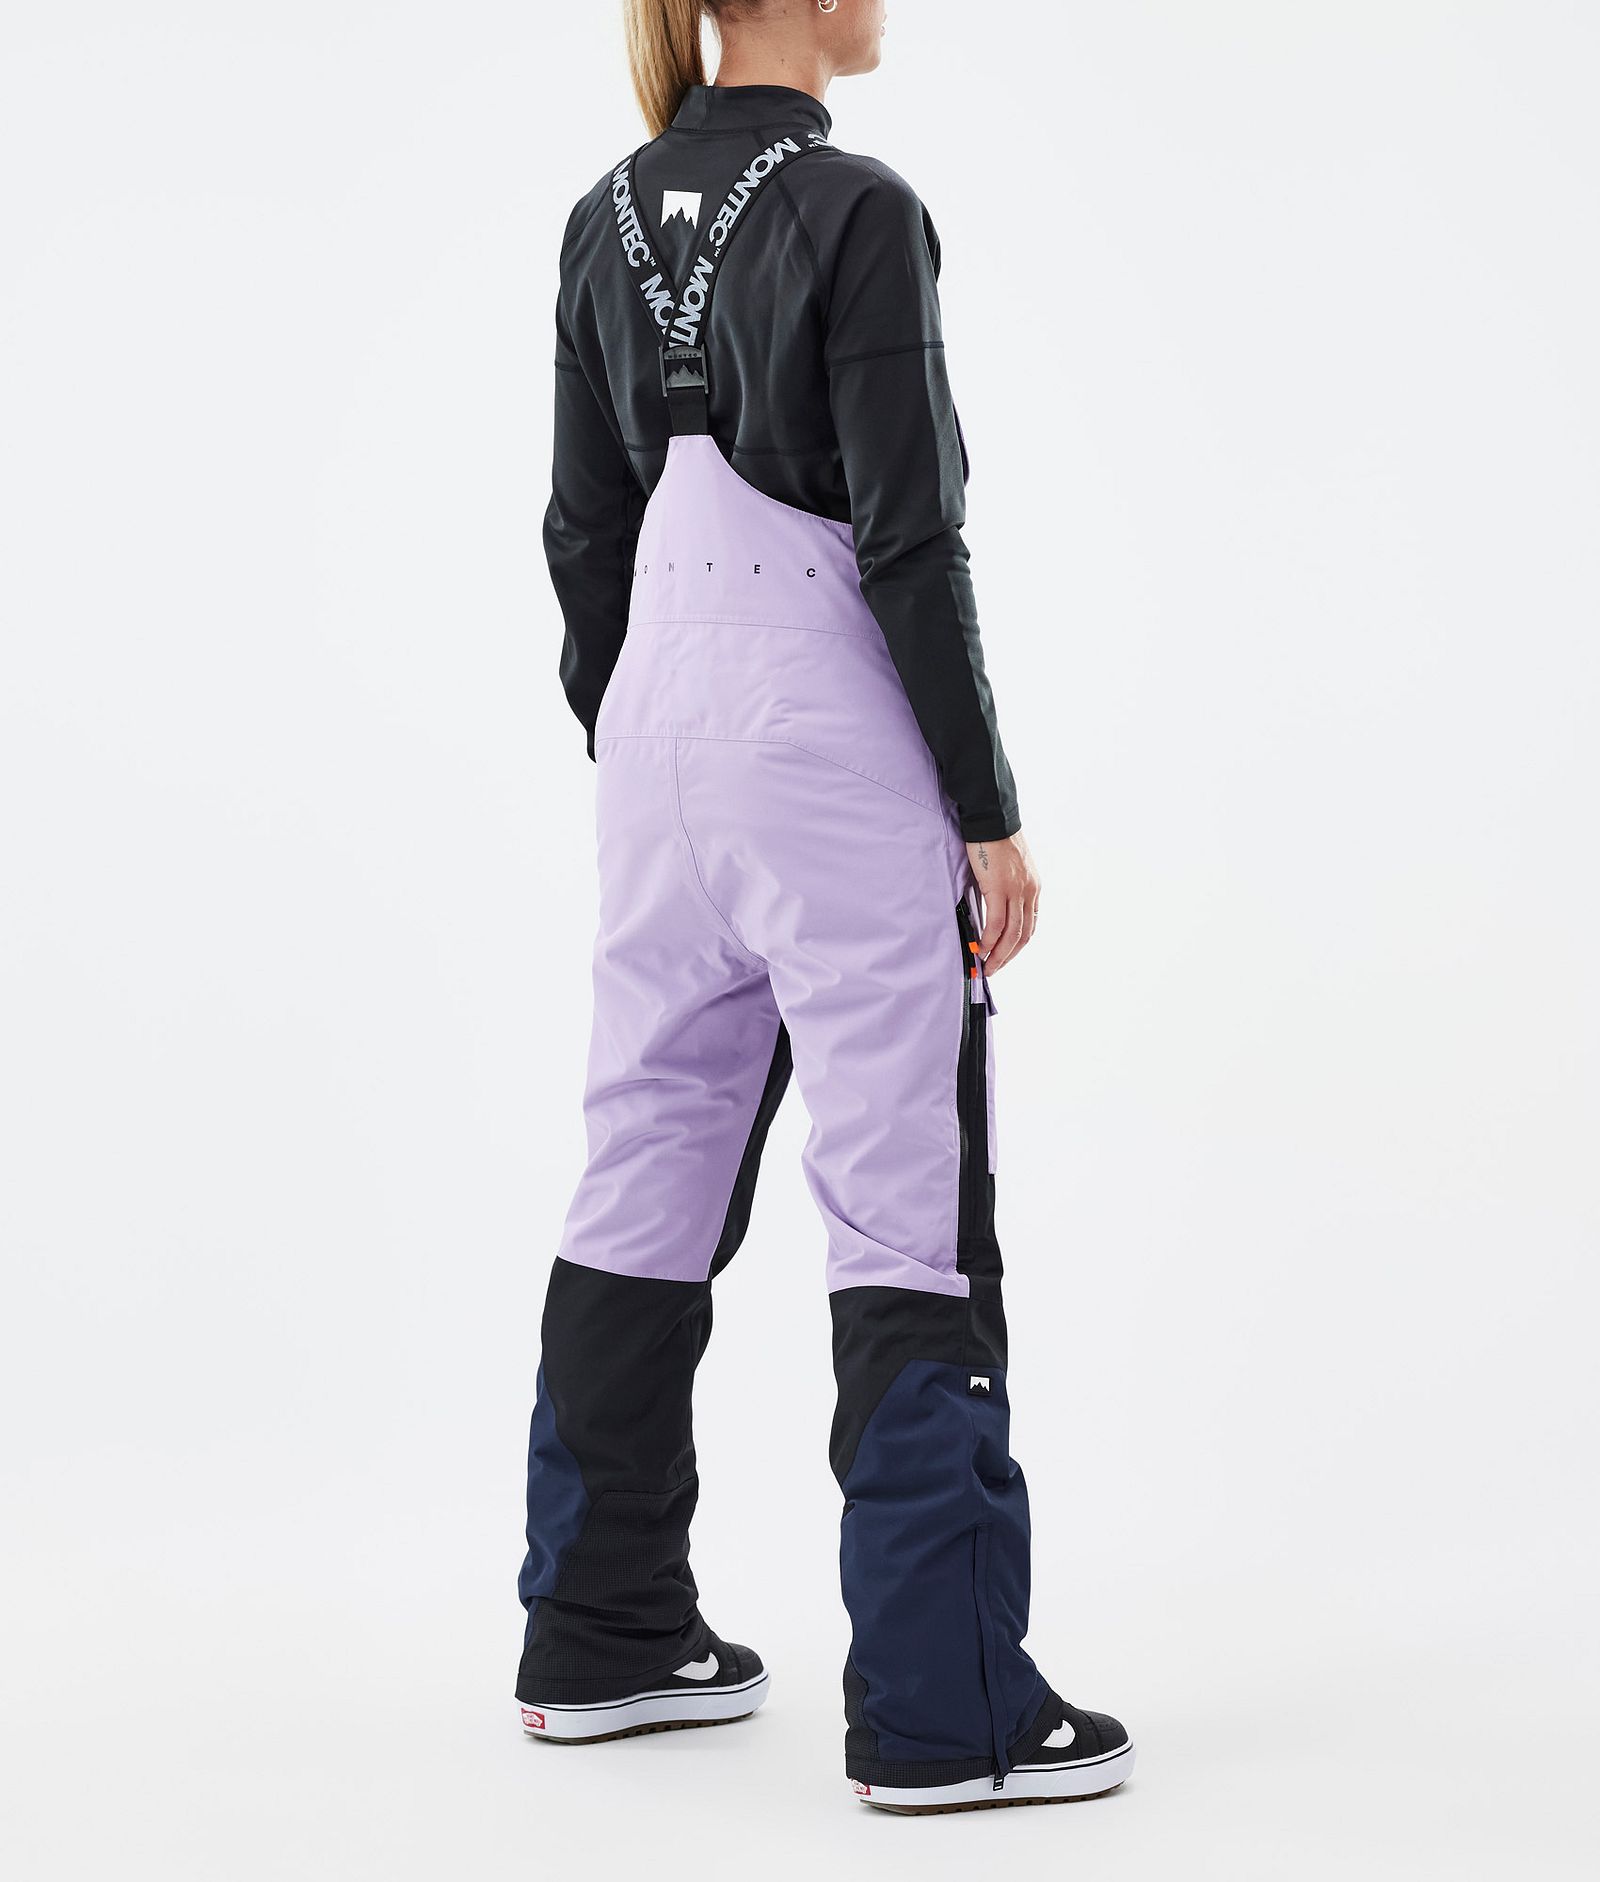 Fawk W Pantalon de Snowboard Femme Faded Violet/Black/Dark Blue